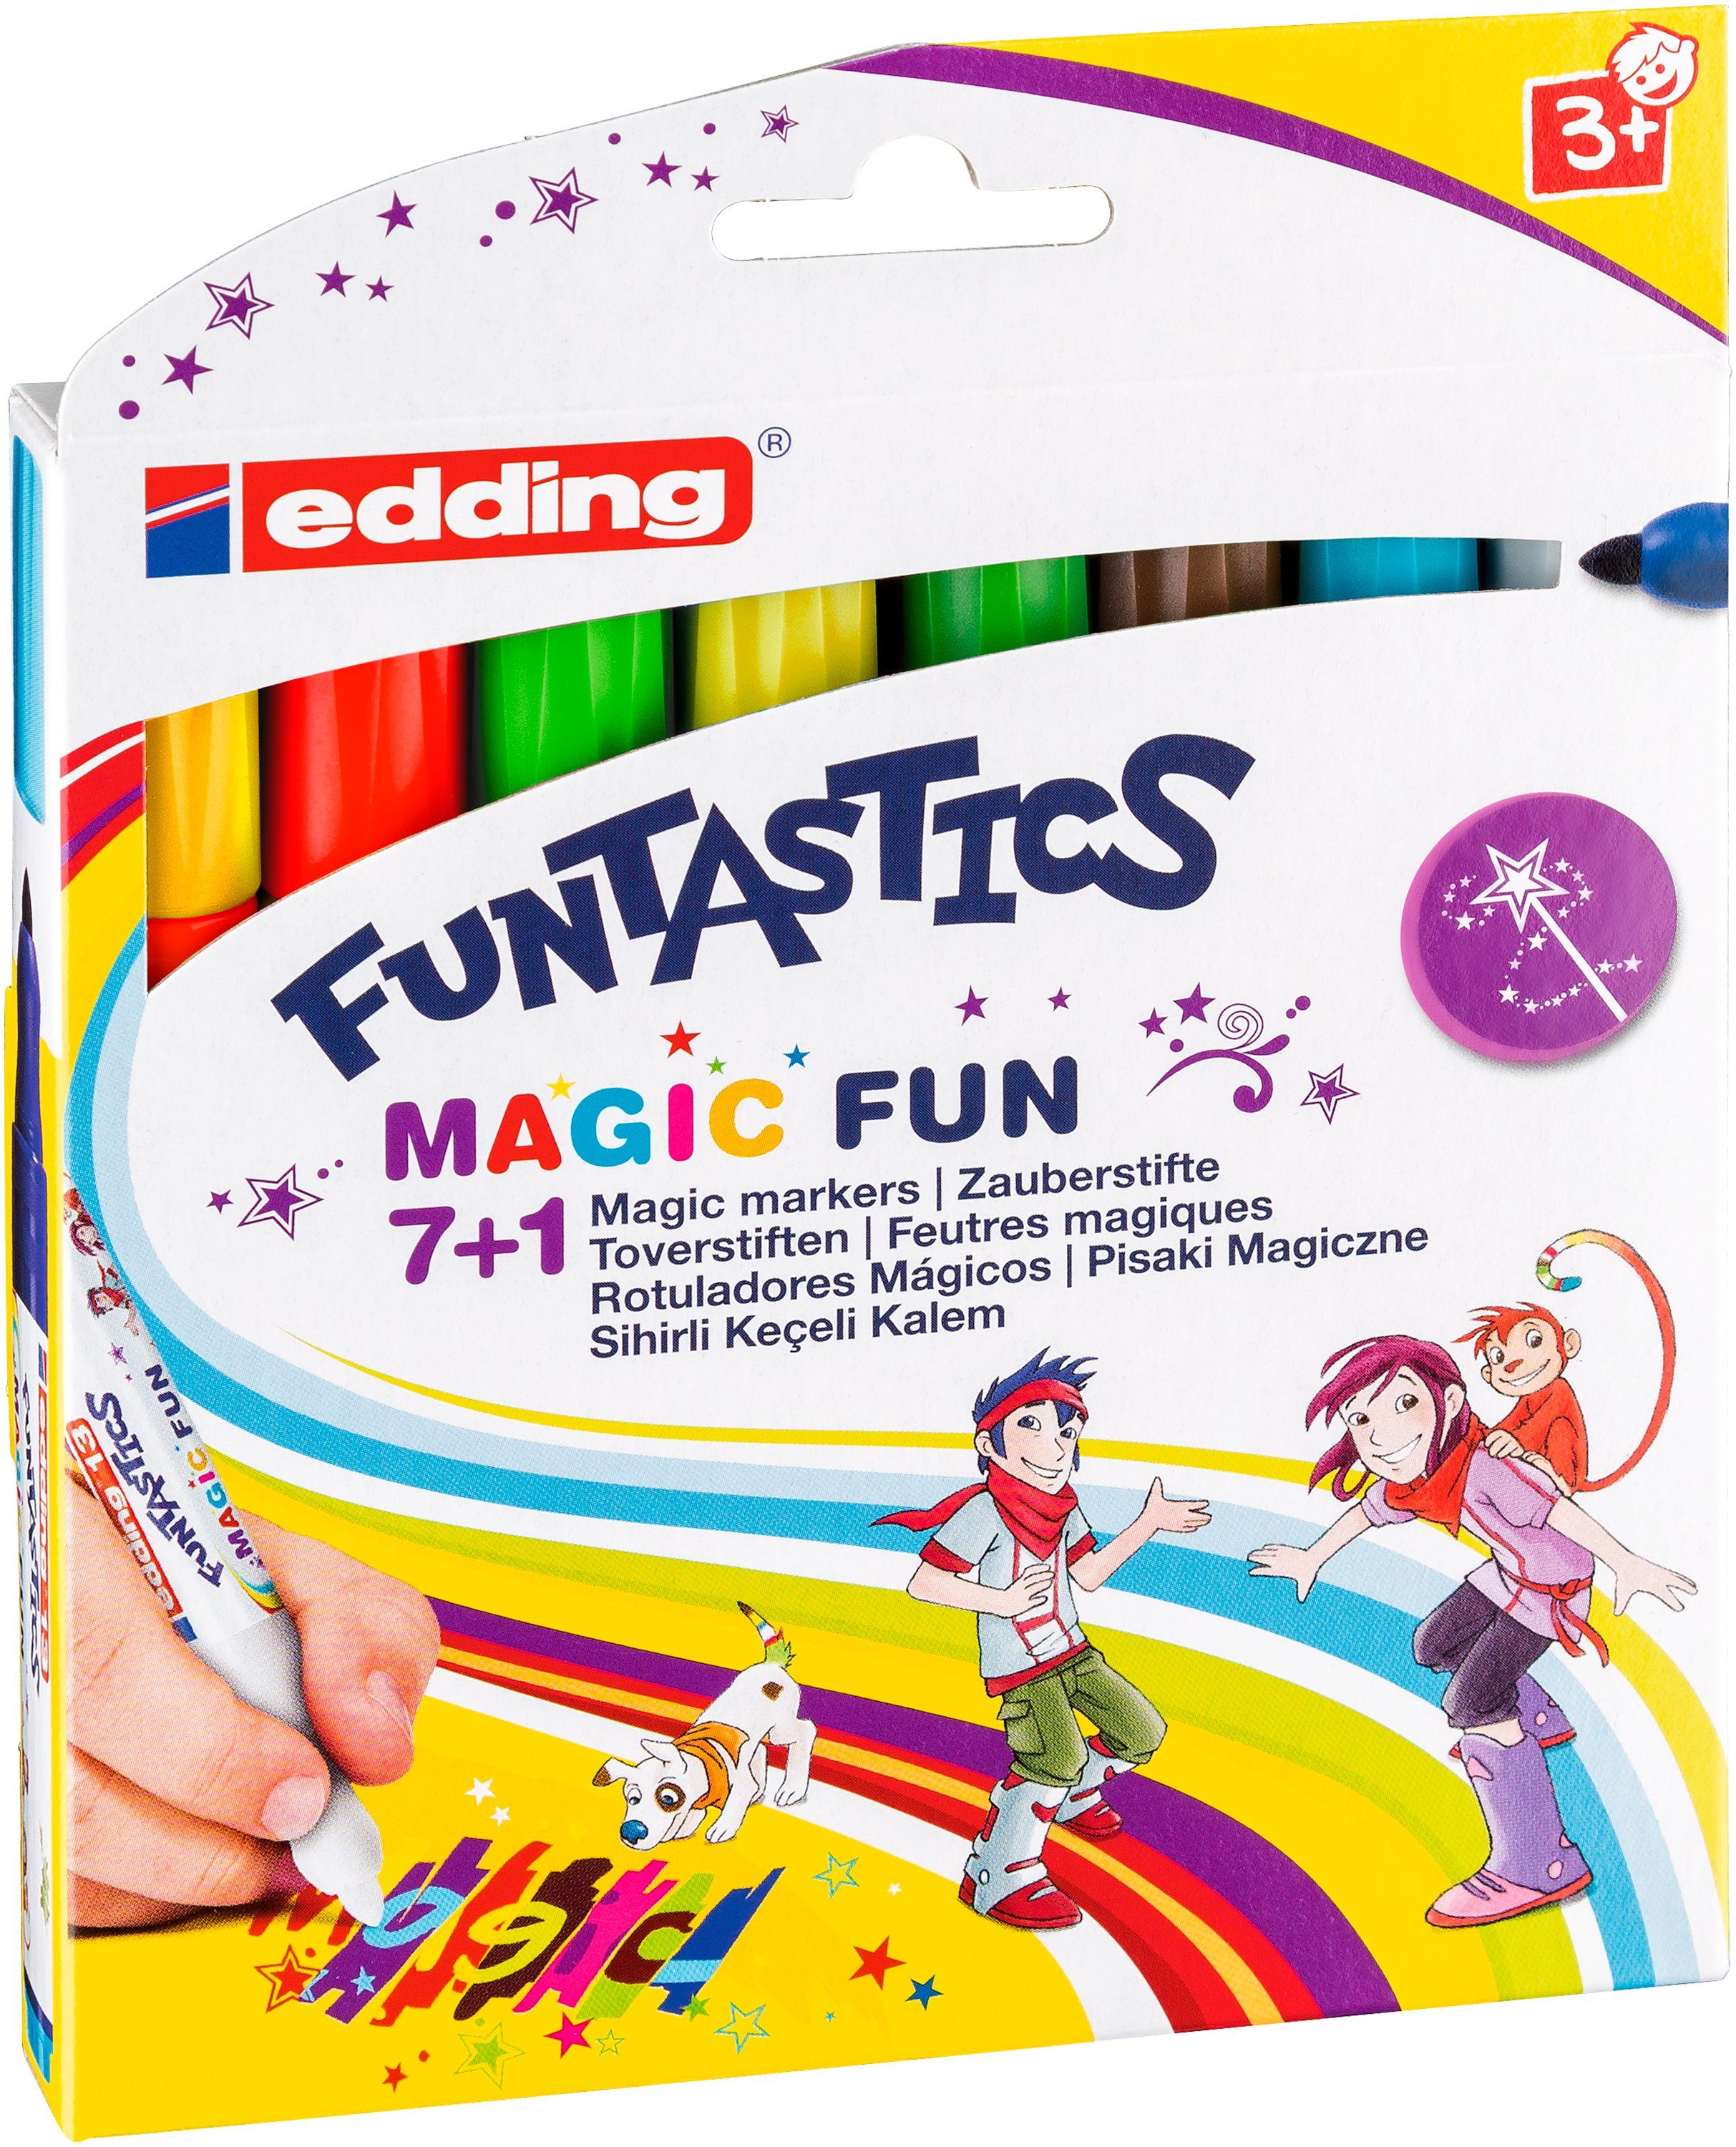 Funtastic 3 magic Faserstift edding mm fun,